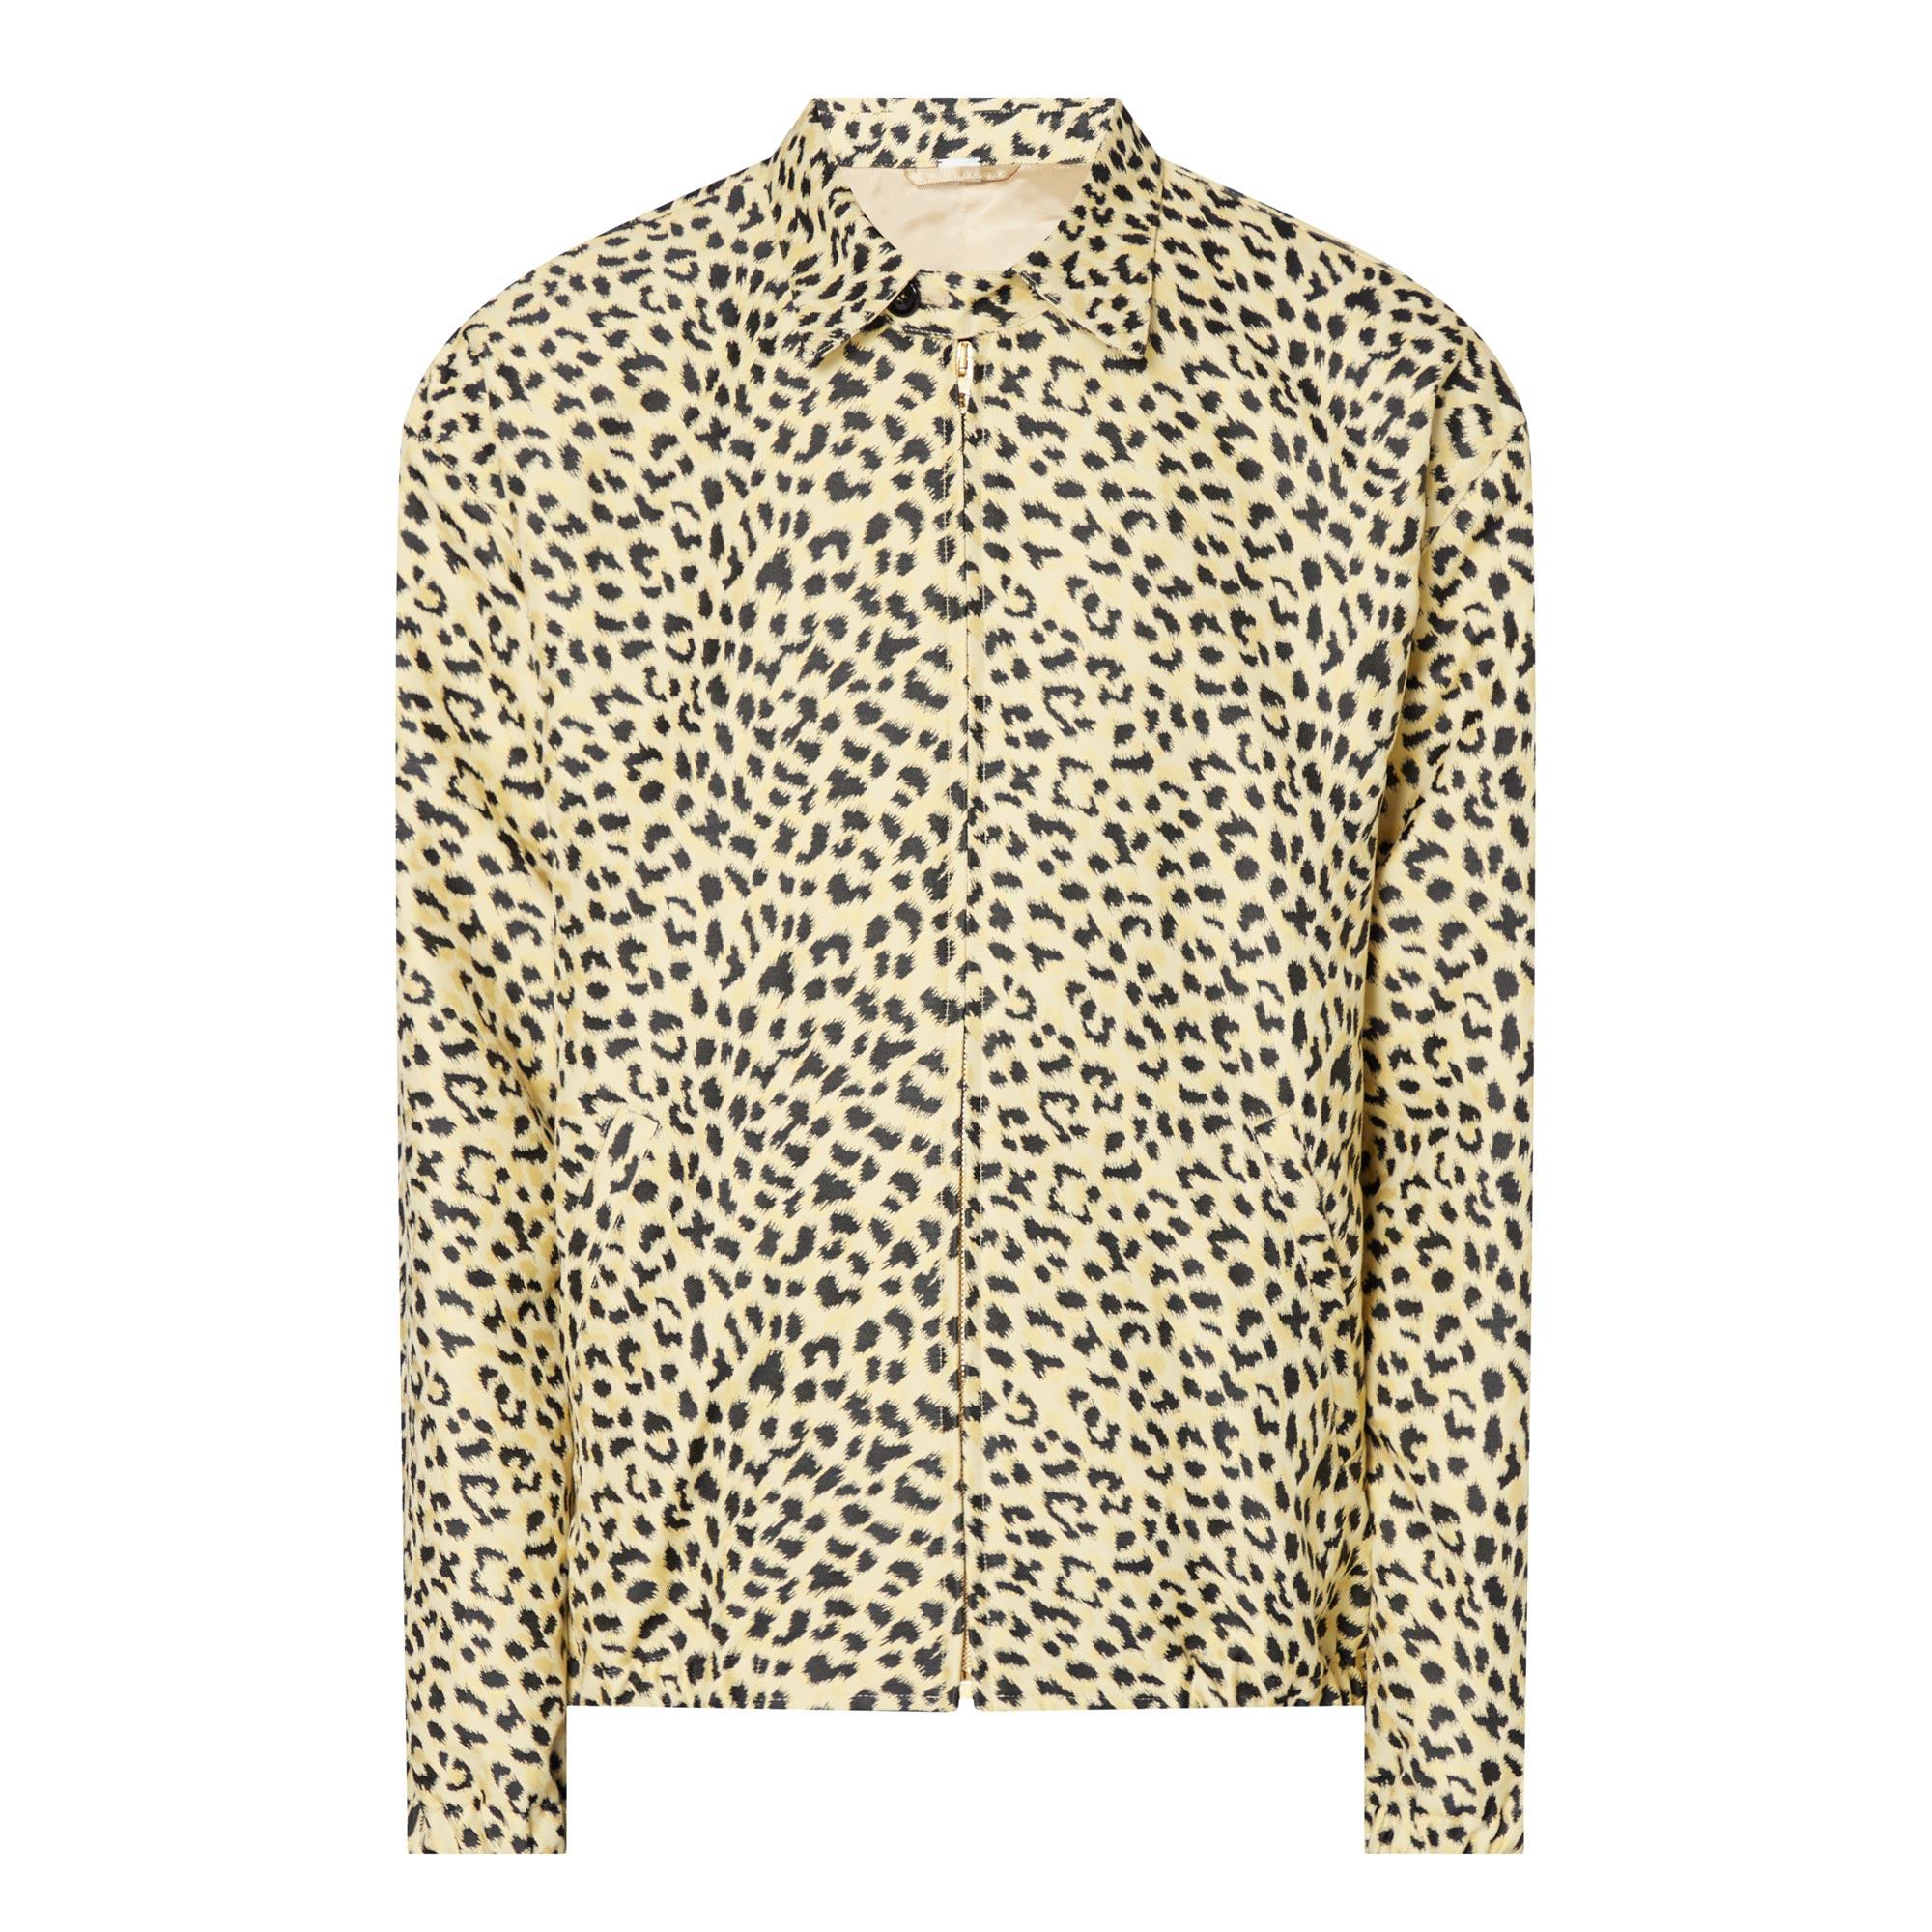 Leopard Print Blouson Jacket